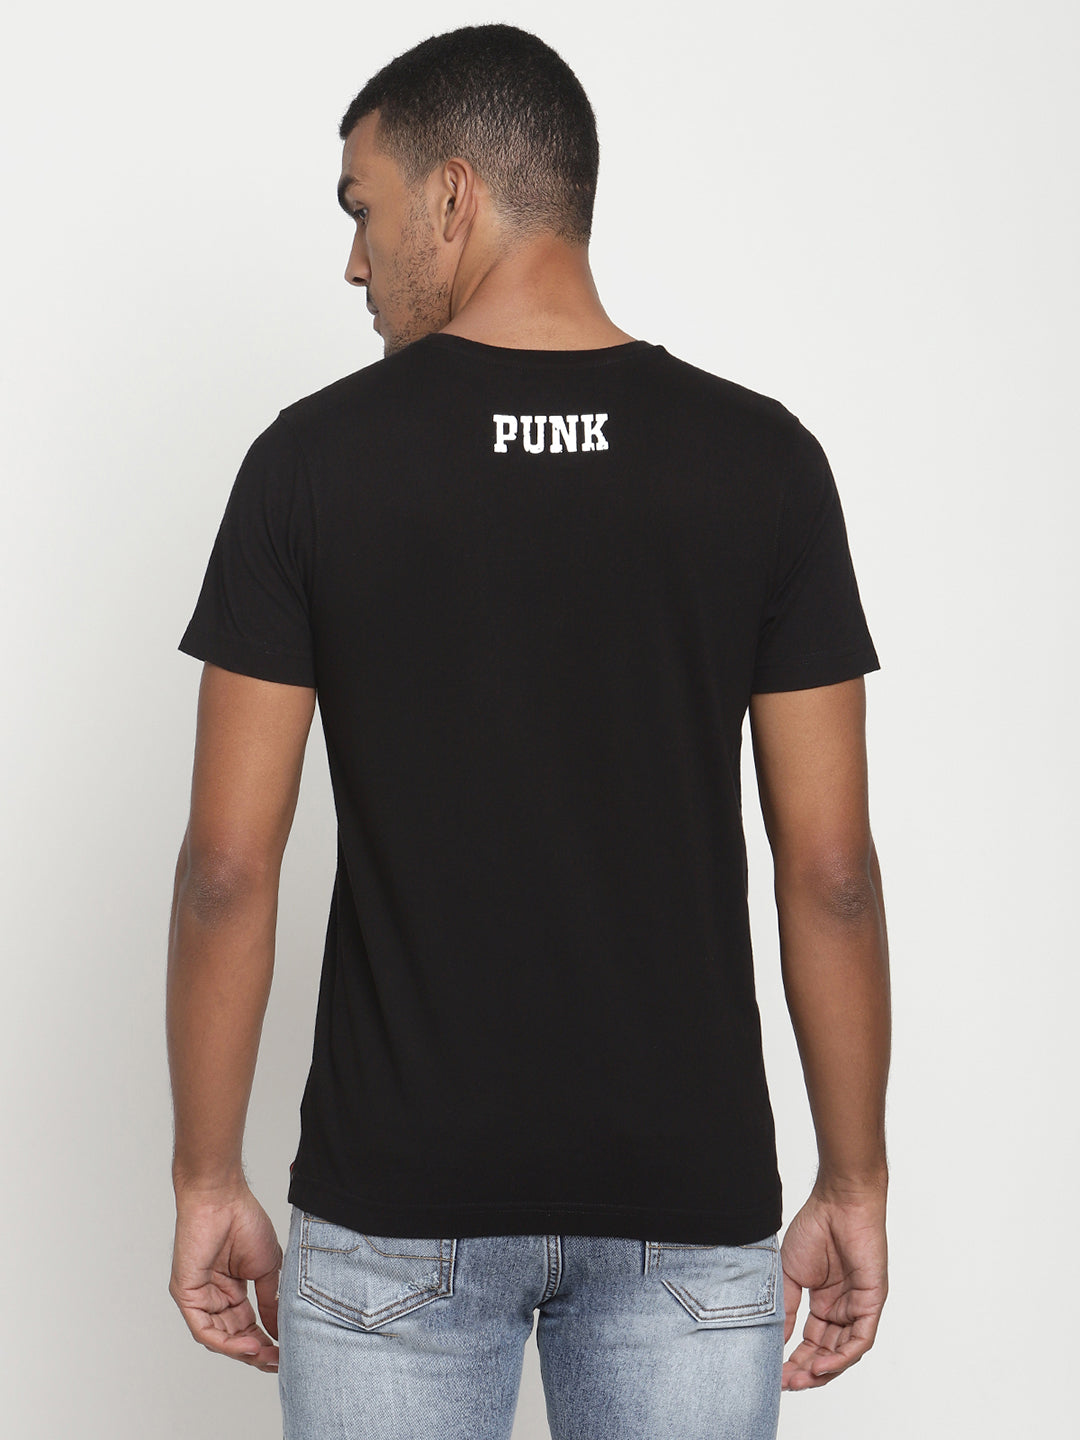 Punk UPSIDE-DOWN Black T-shirt